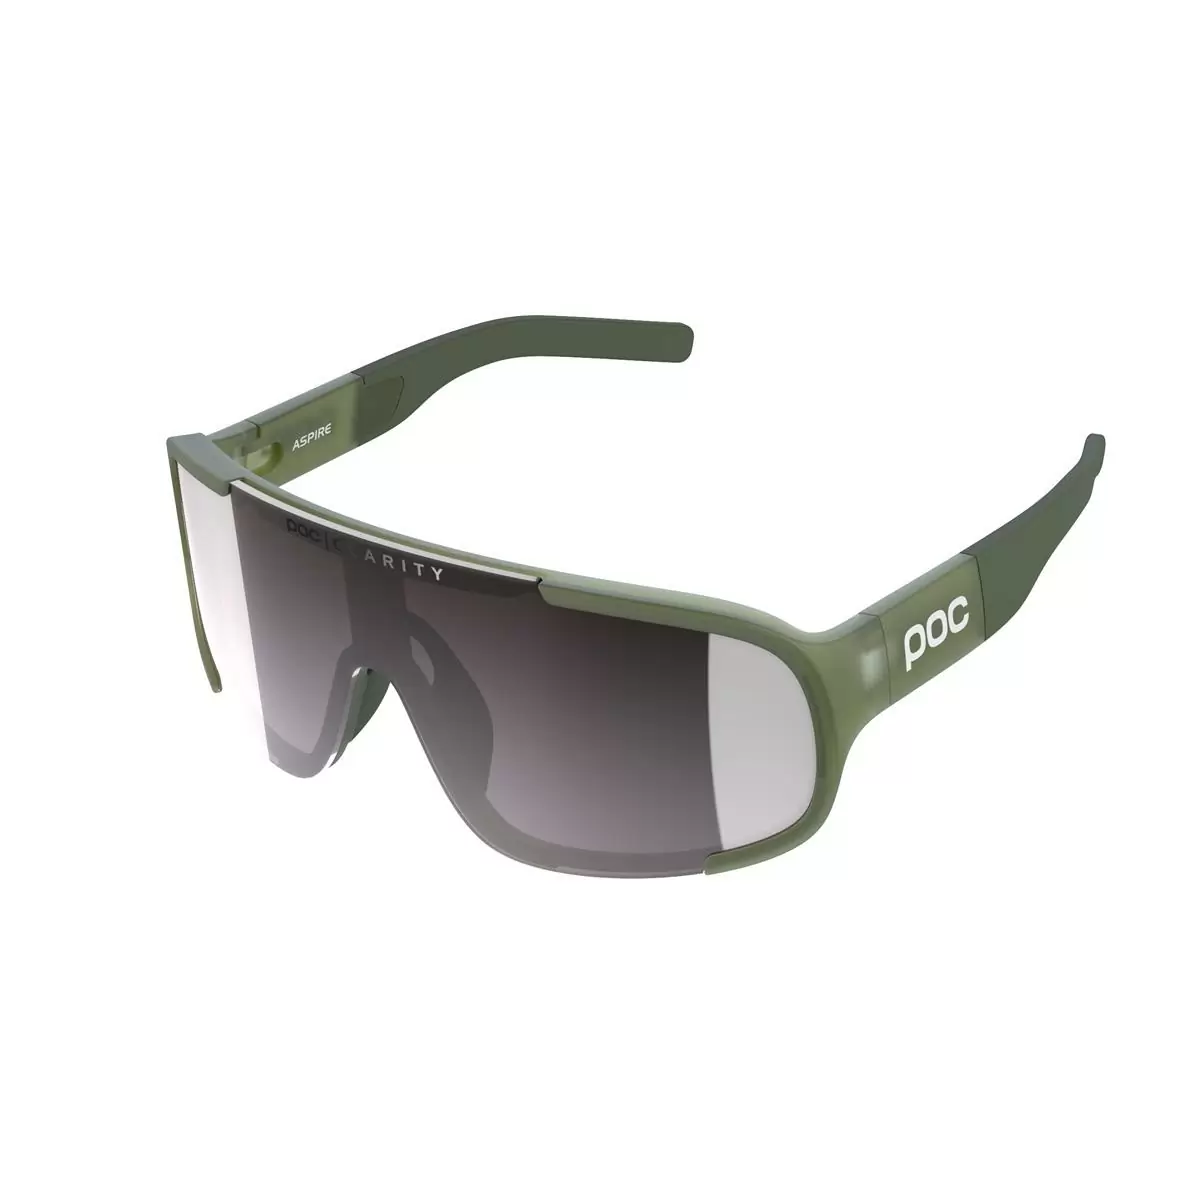 Aspire Sunglasses Epidote Green Translucent Lens Violet/Silver Mirror - image